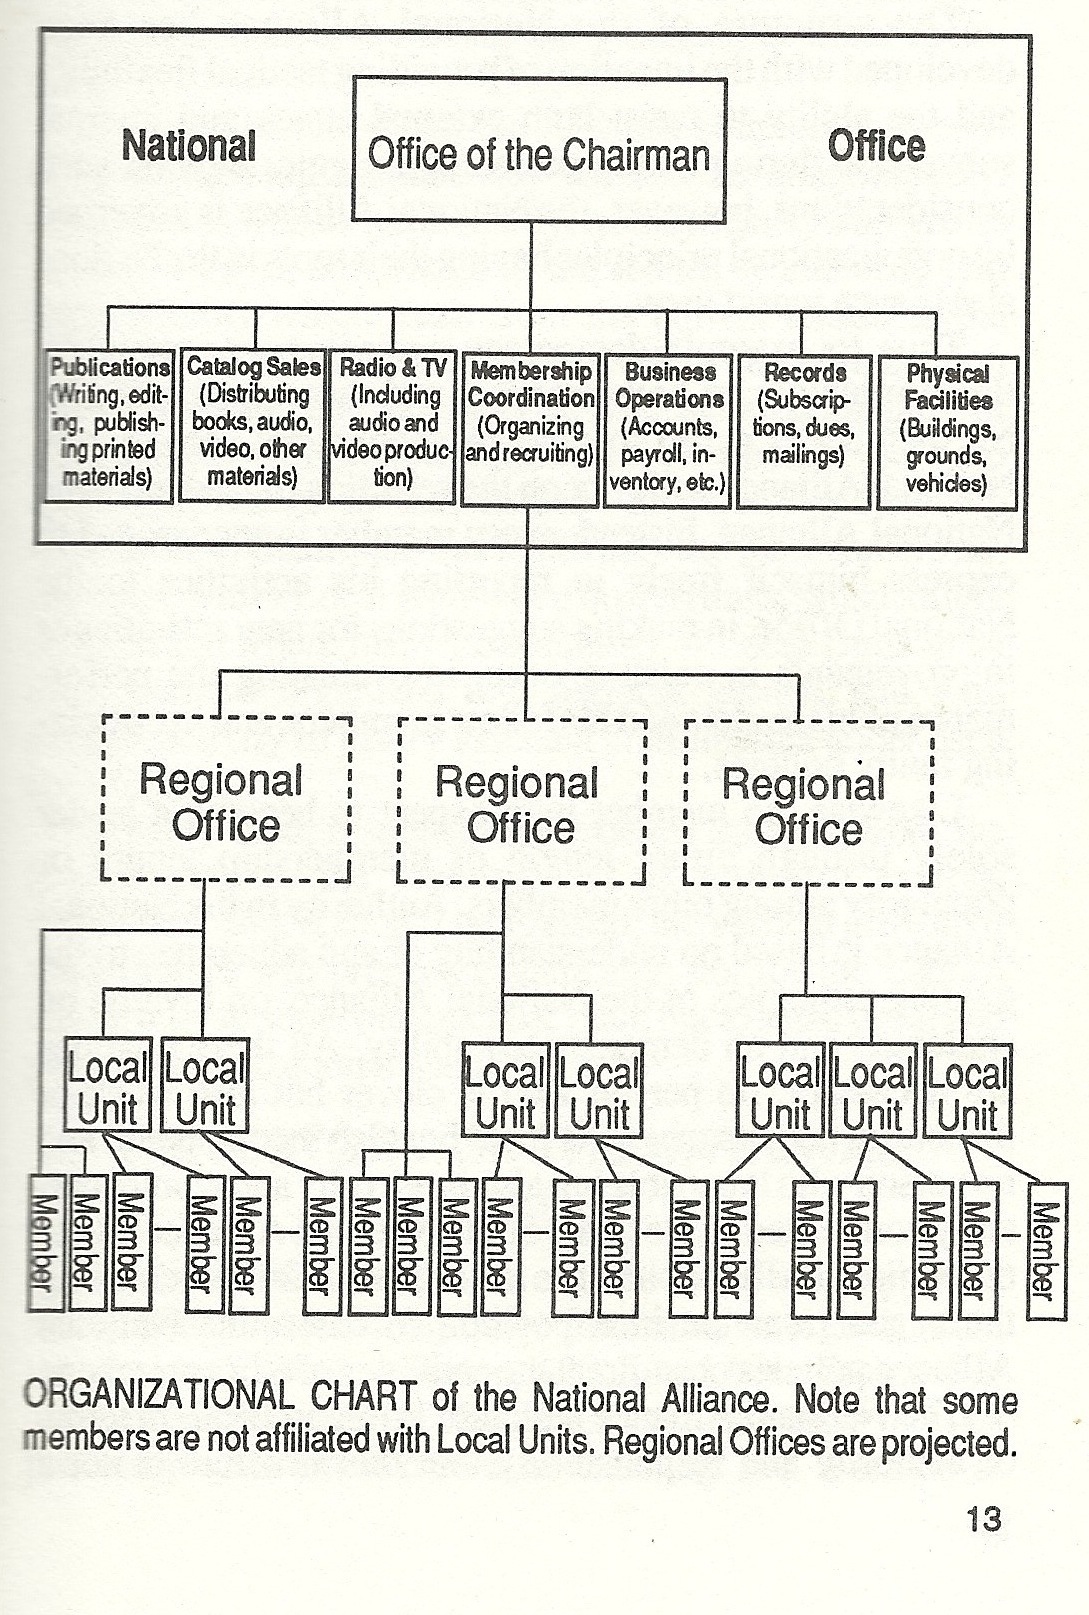 NA organizational chart copy 2.jpg